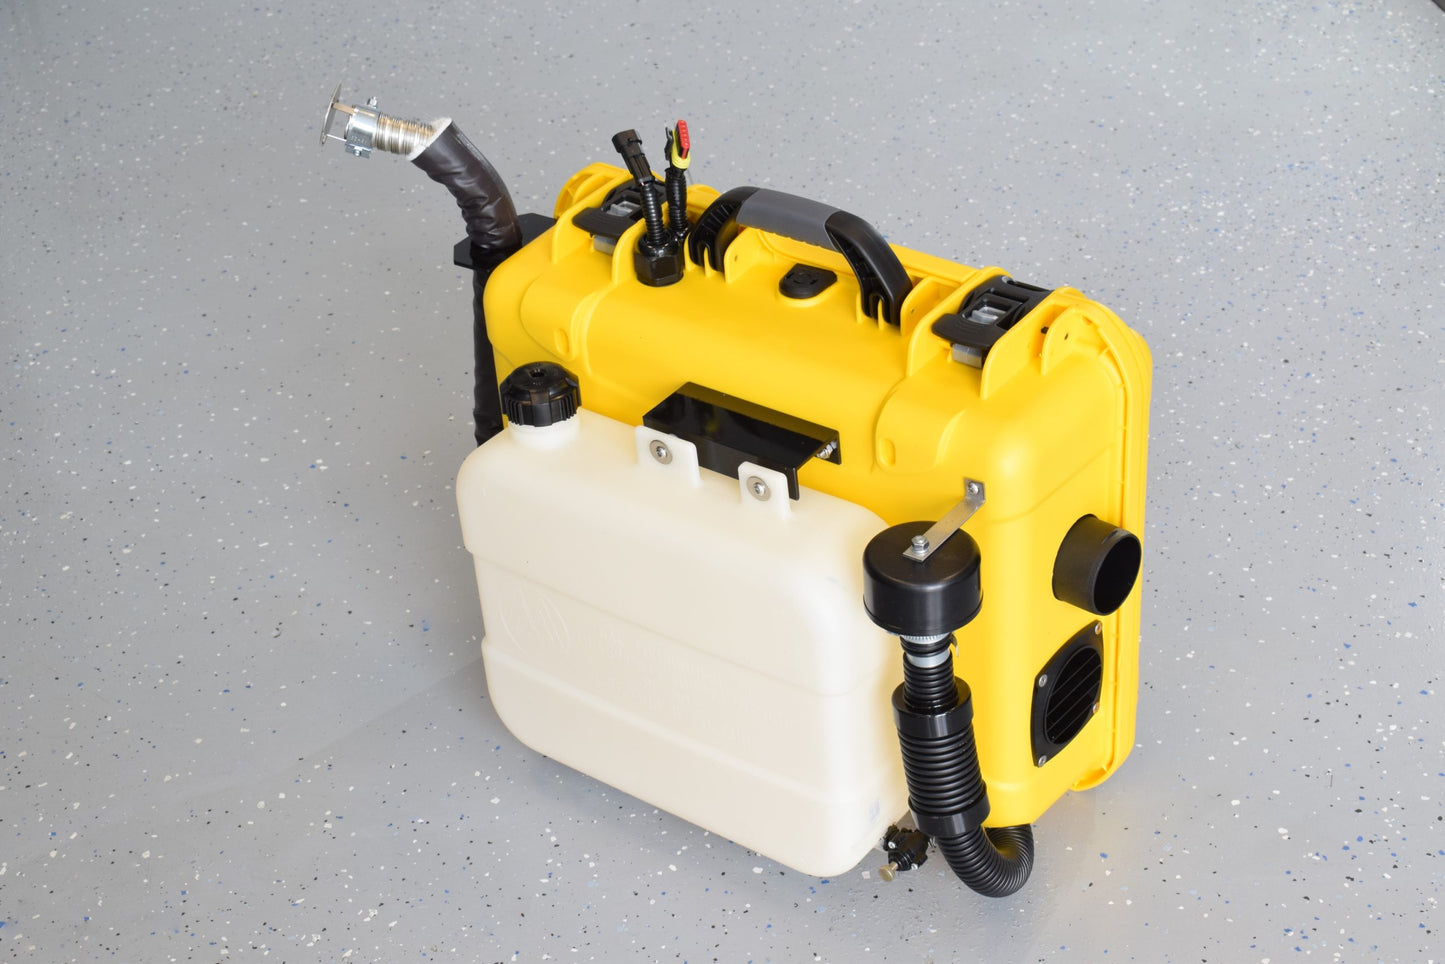 Portable Diesel Air Heater Planar/AutoTerm 2D-12V